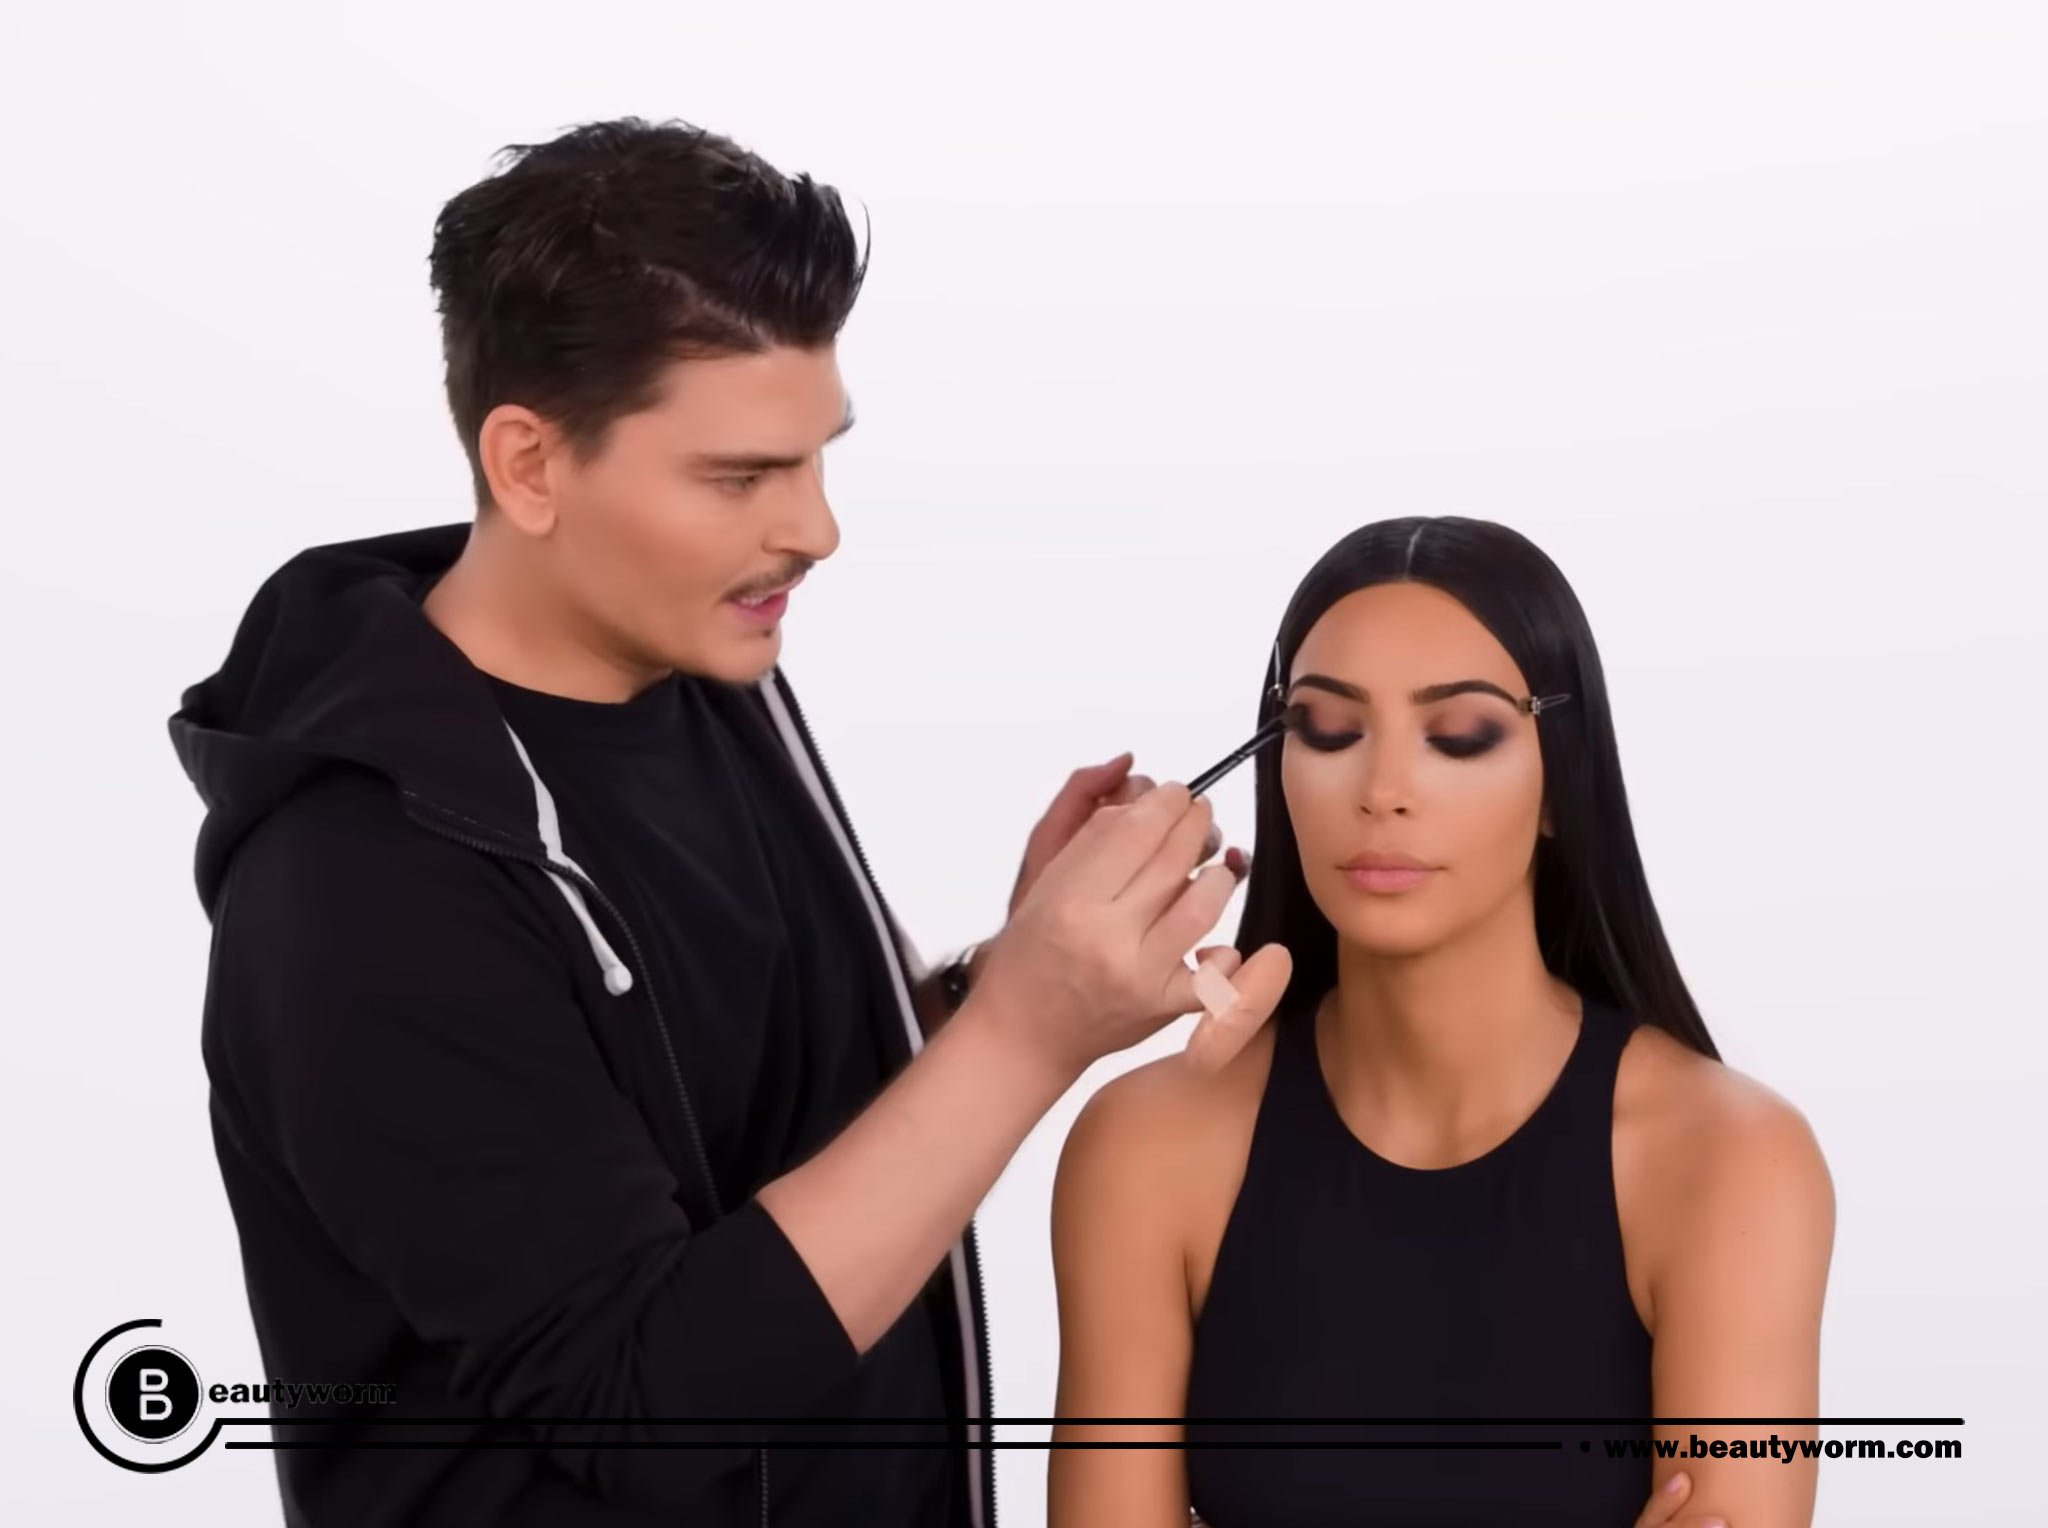 What's Kim Kardashian's makeup brand called?